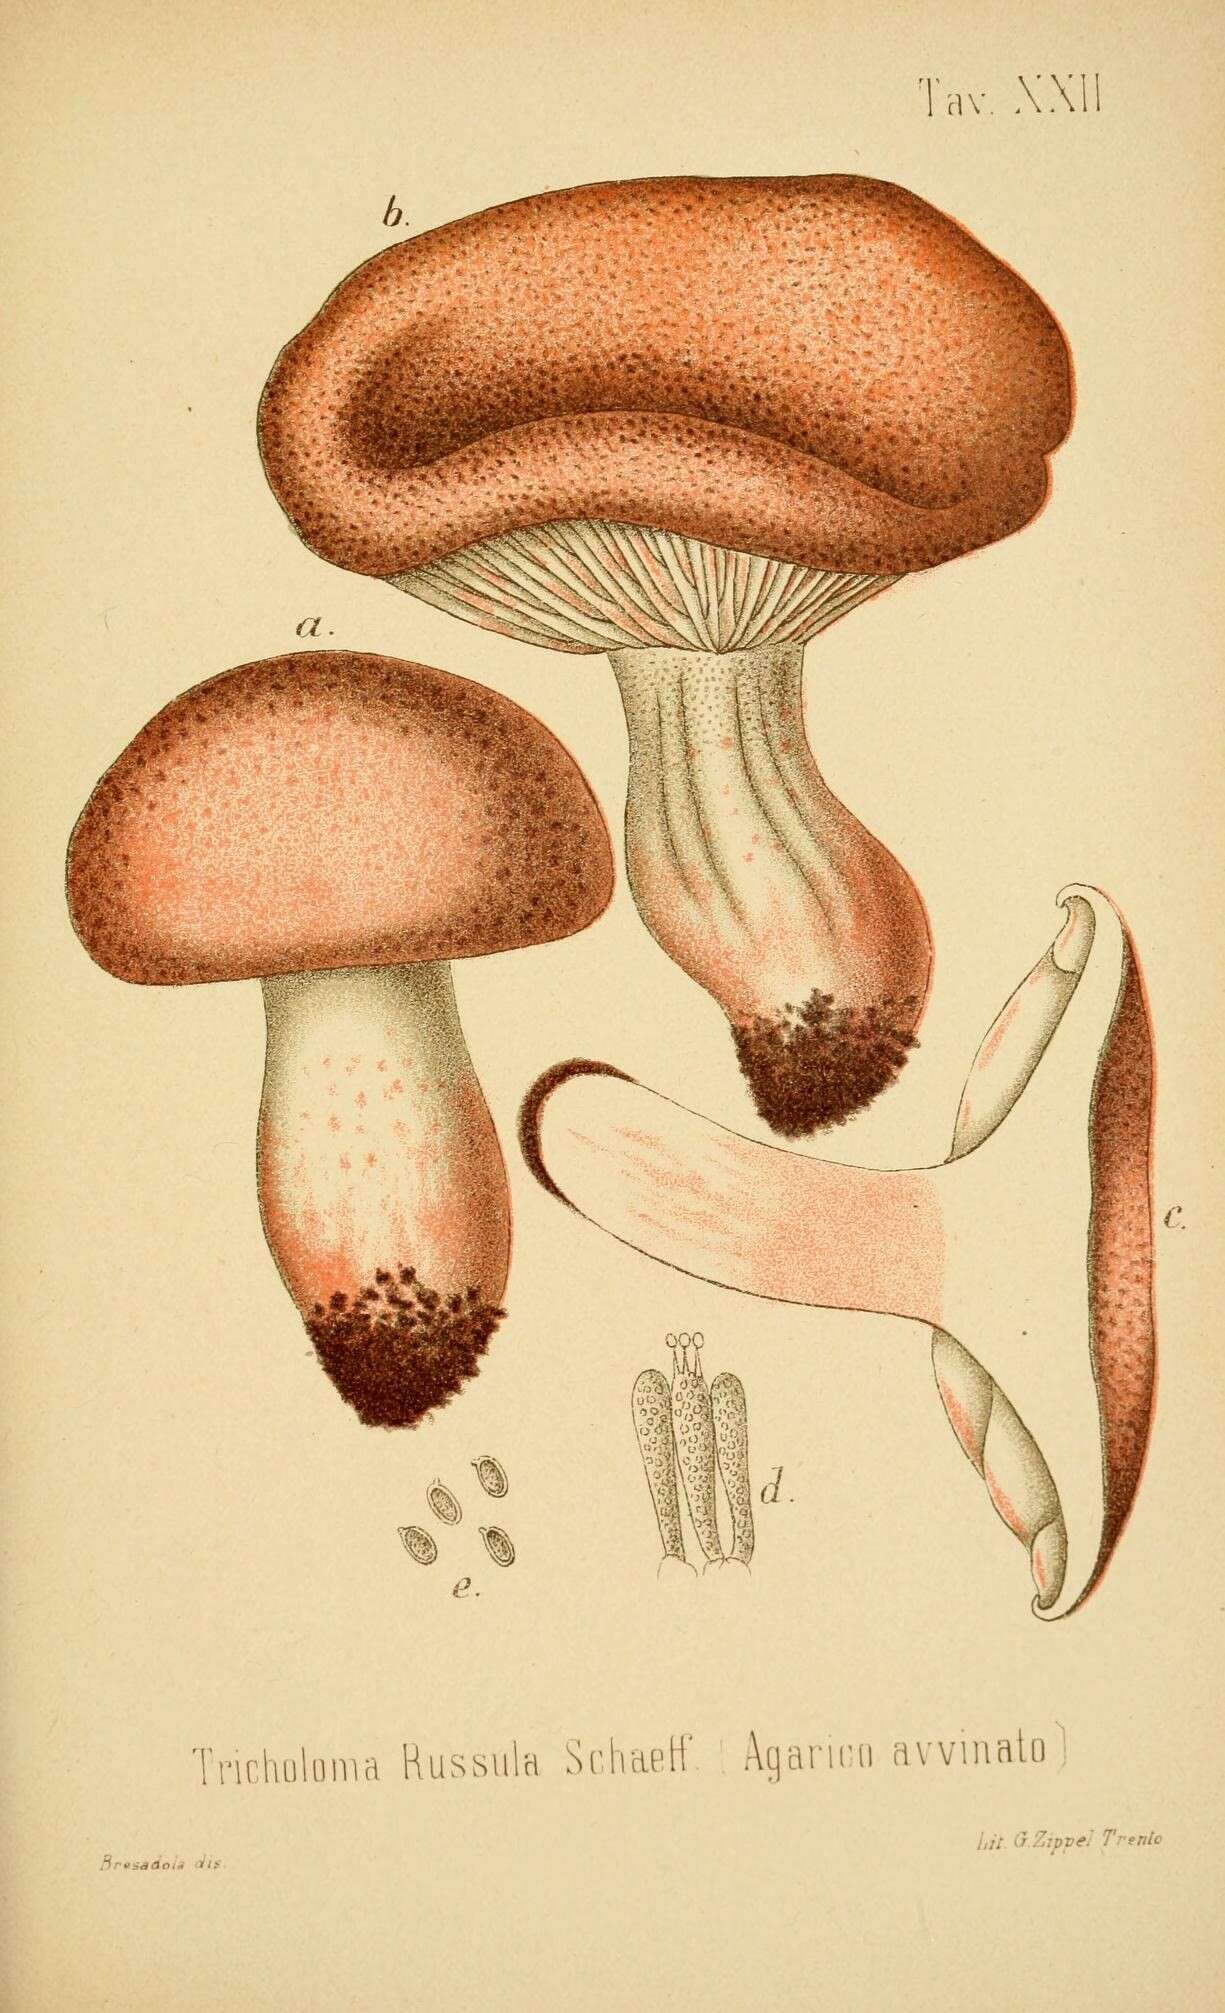 Image of Hygrophorus russula (Schaeff. ex Fr.) Kauffman 1918